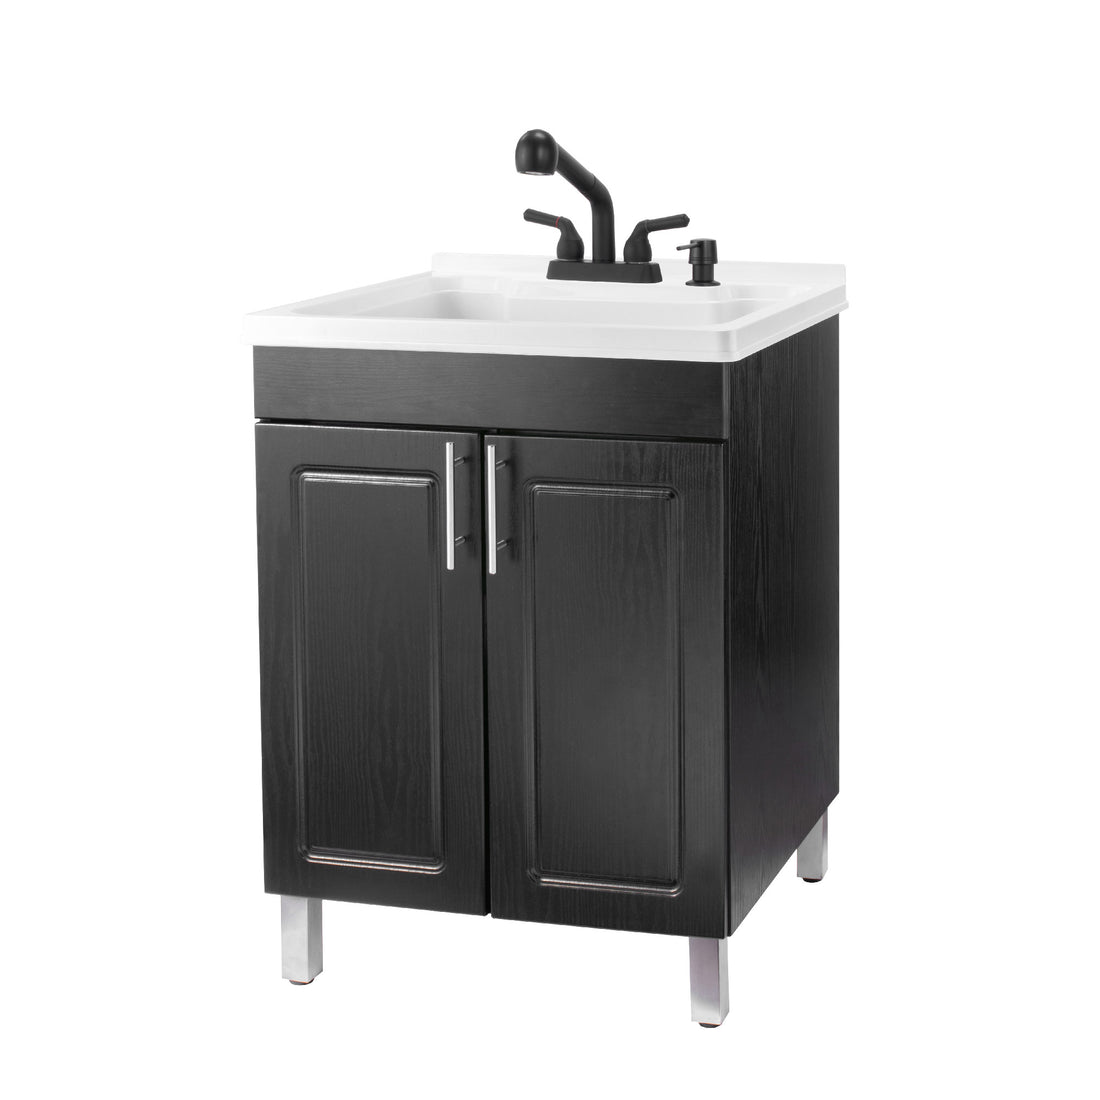 Tehila Black Vanity Cabinet and White Utility Sink with Black Finish Pull-Out Faucet - Utility sinks vanites Tehila